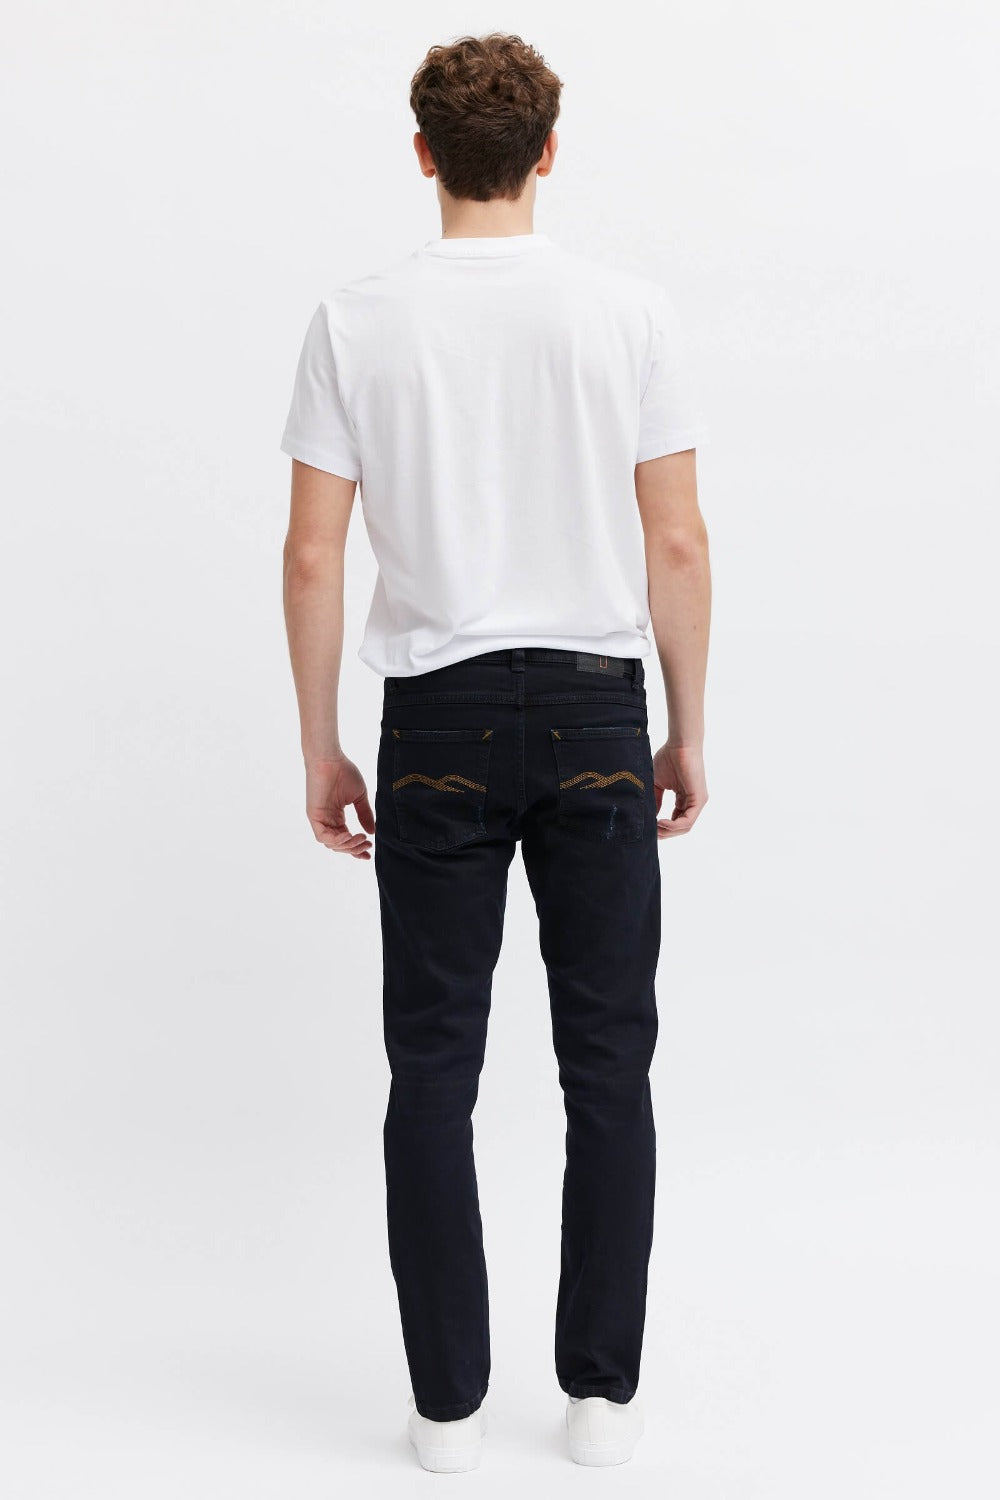 Men's black denim jeans - organic and stylish